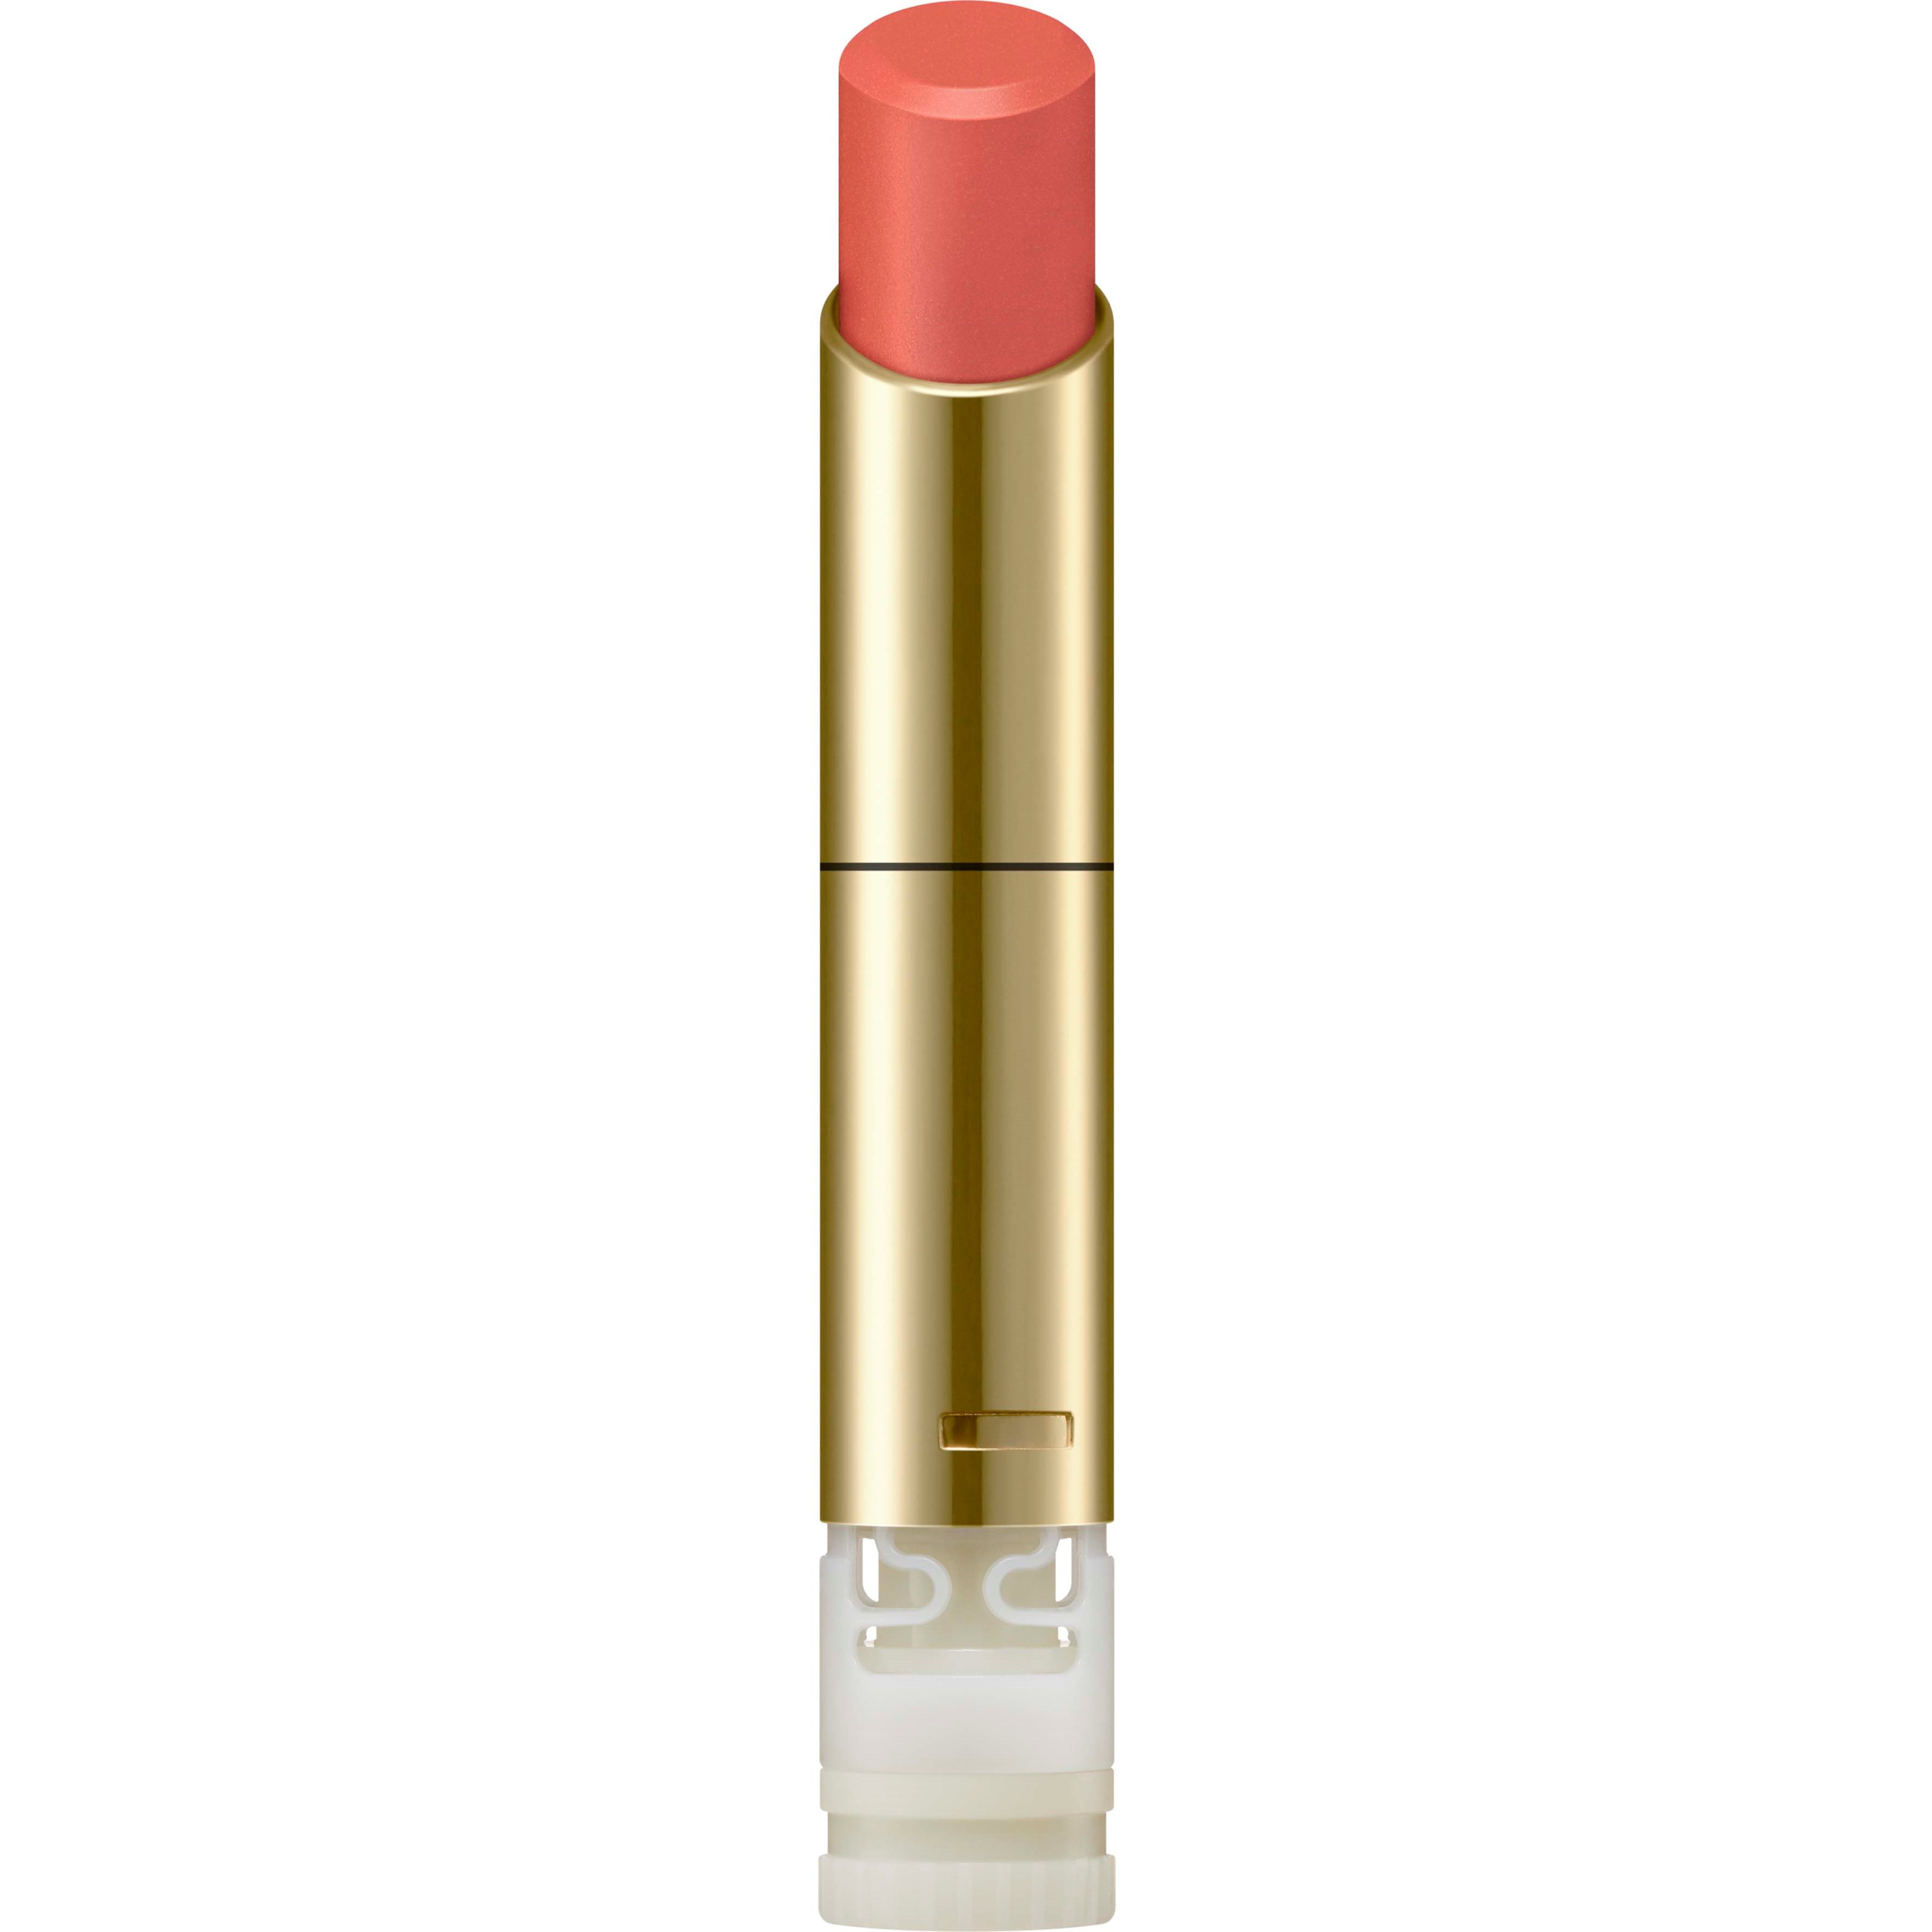 Bilde av Sensai Lasting Plump Lipstick Lp05 Light Coral